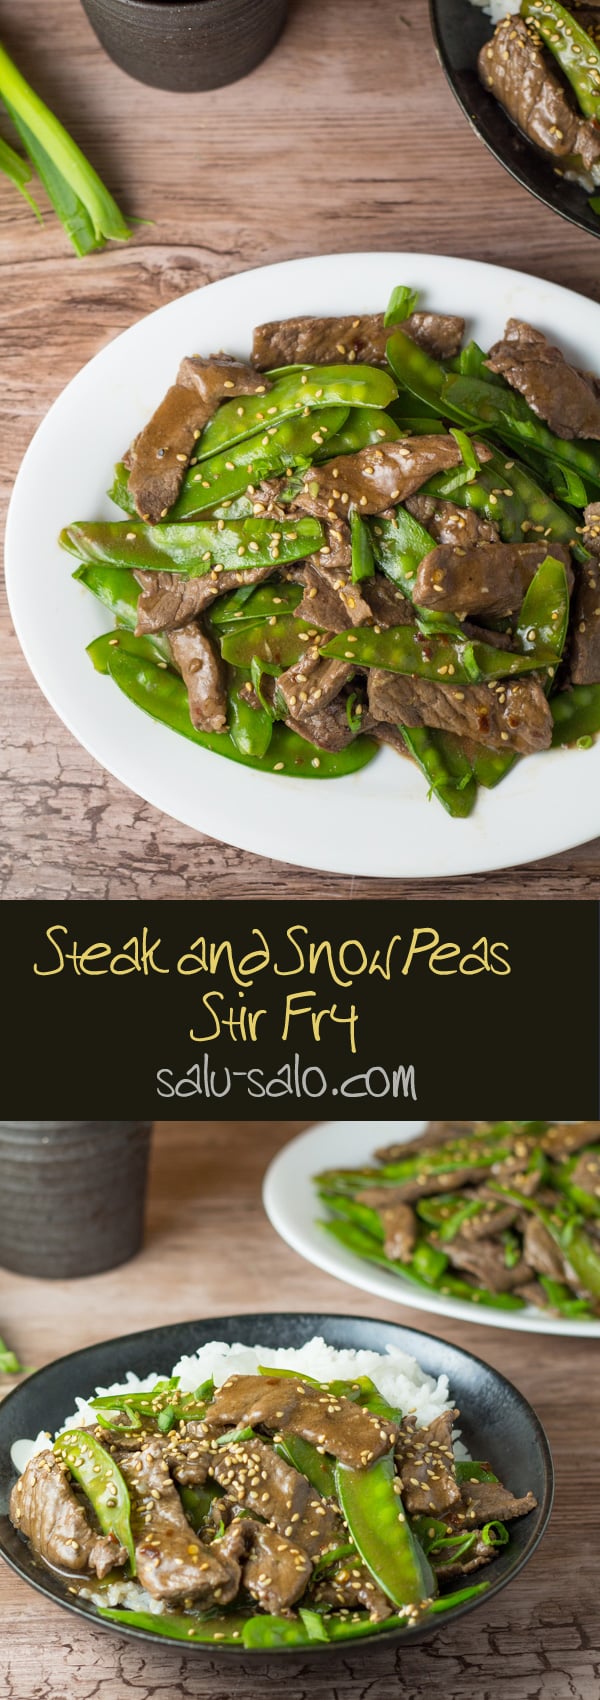 Steak and Snow Peas Stir Fry